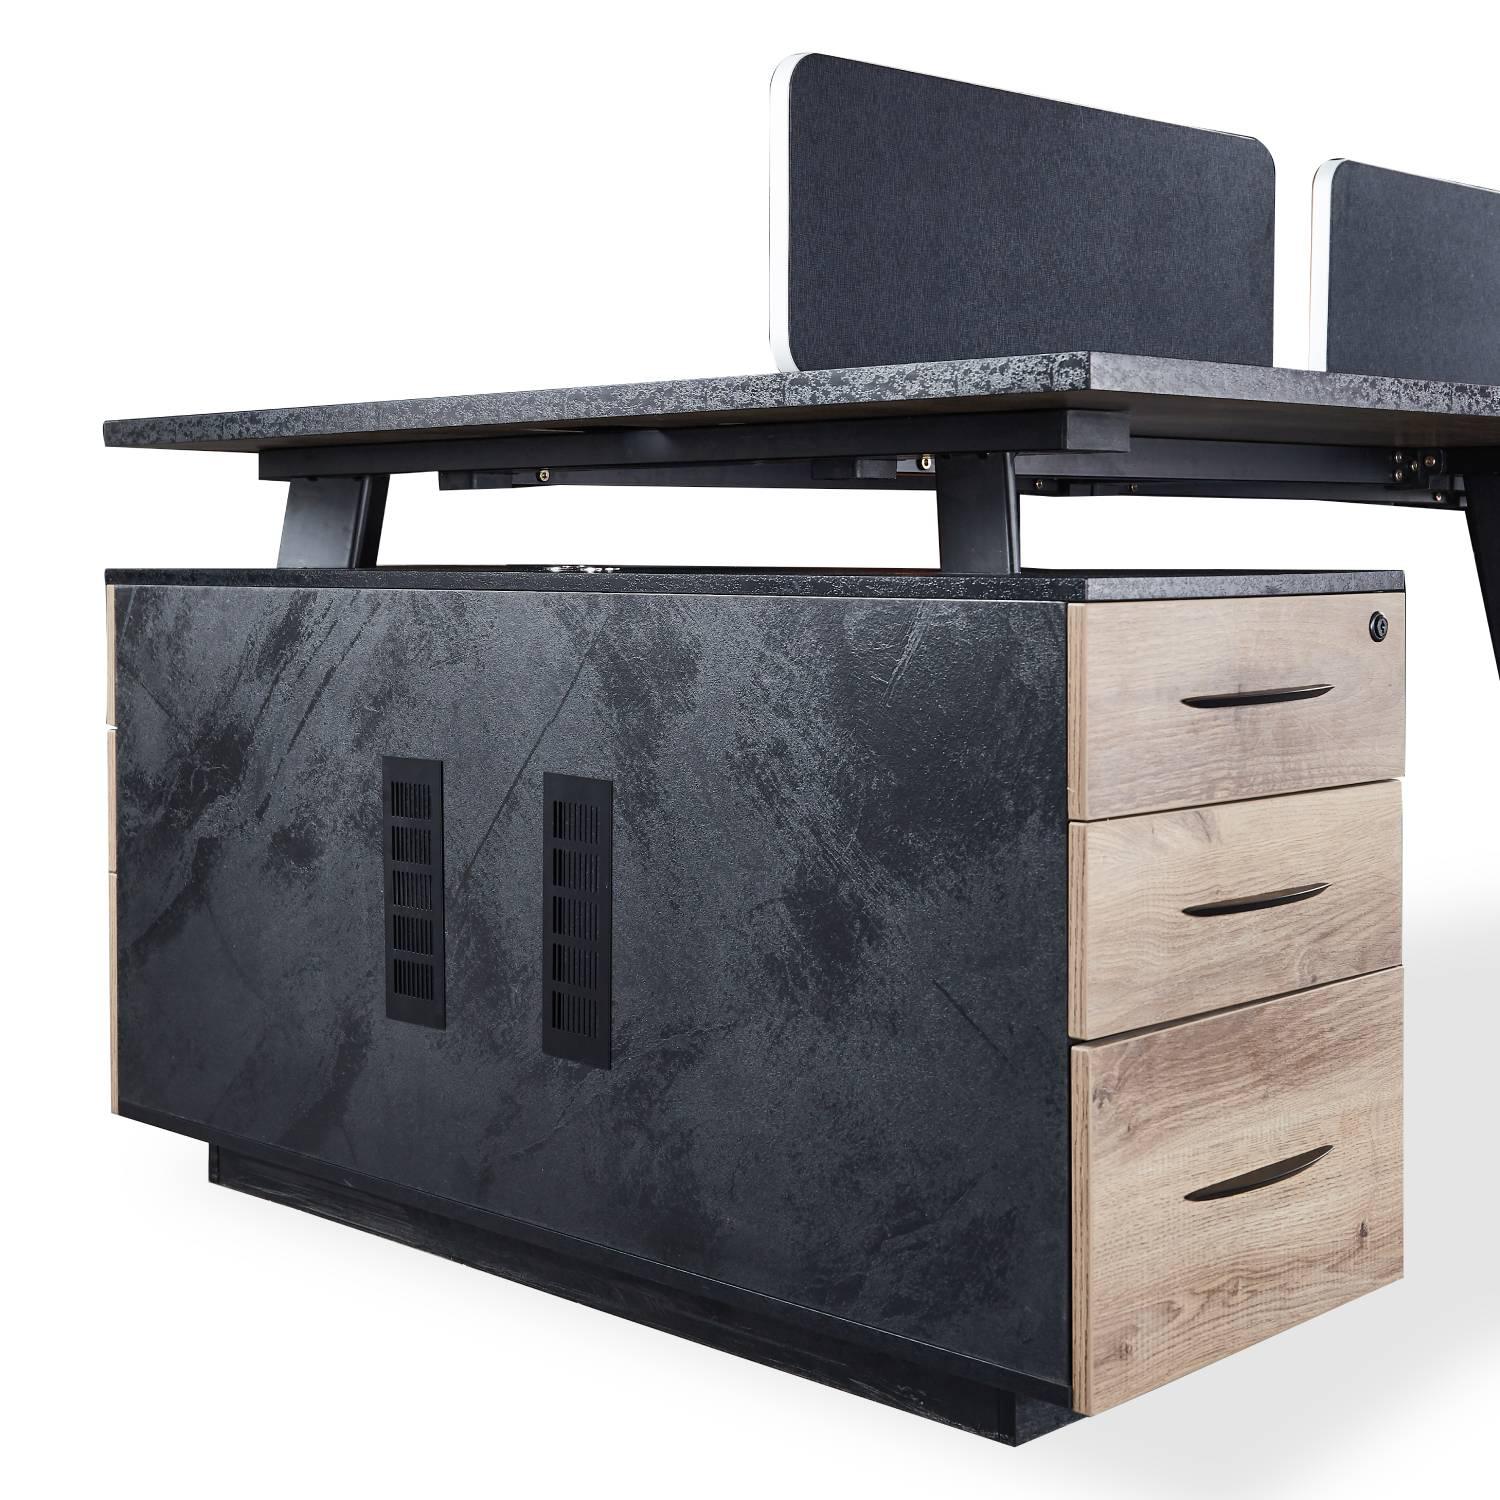 Arto 4 People Back to back Workstation with 4 Cabinets 2.4M - Warm Oak & Black - Furniture Castle